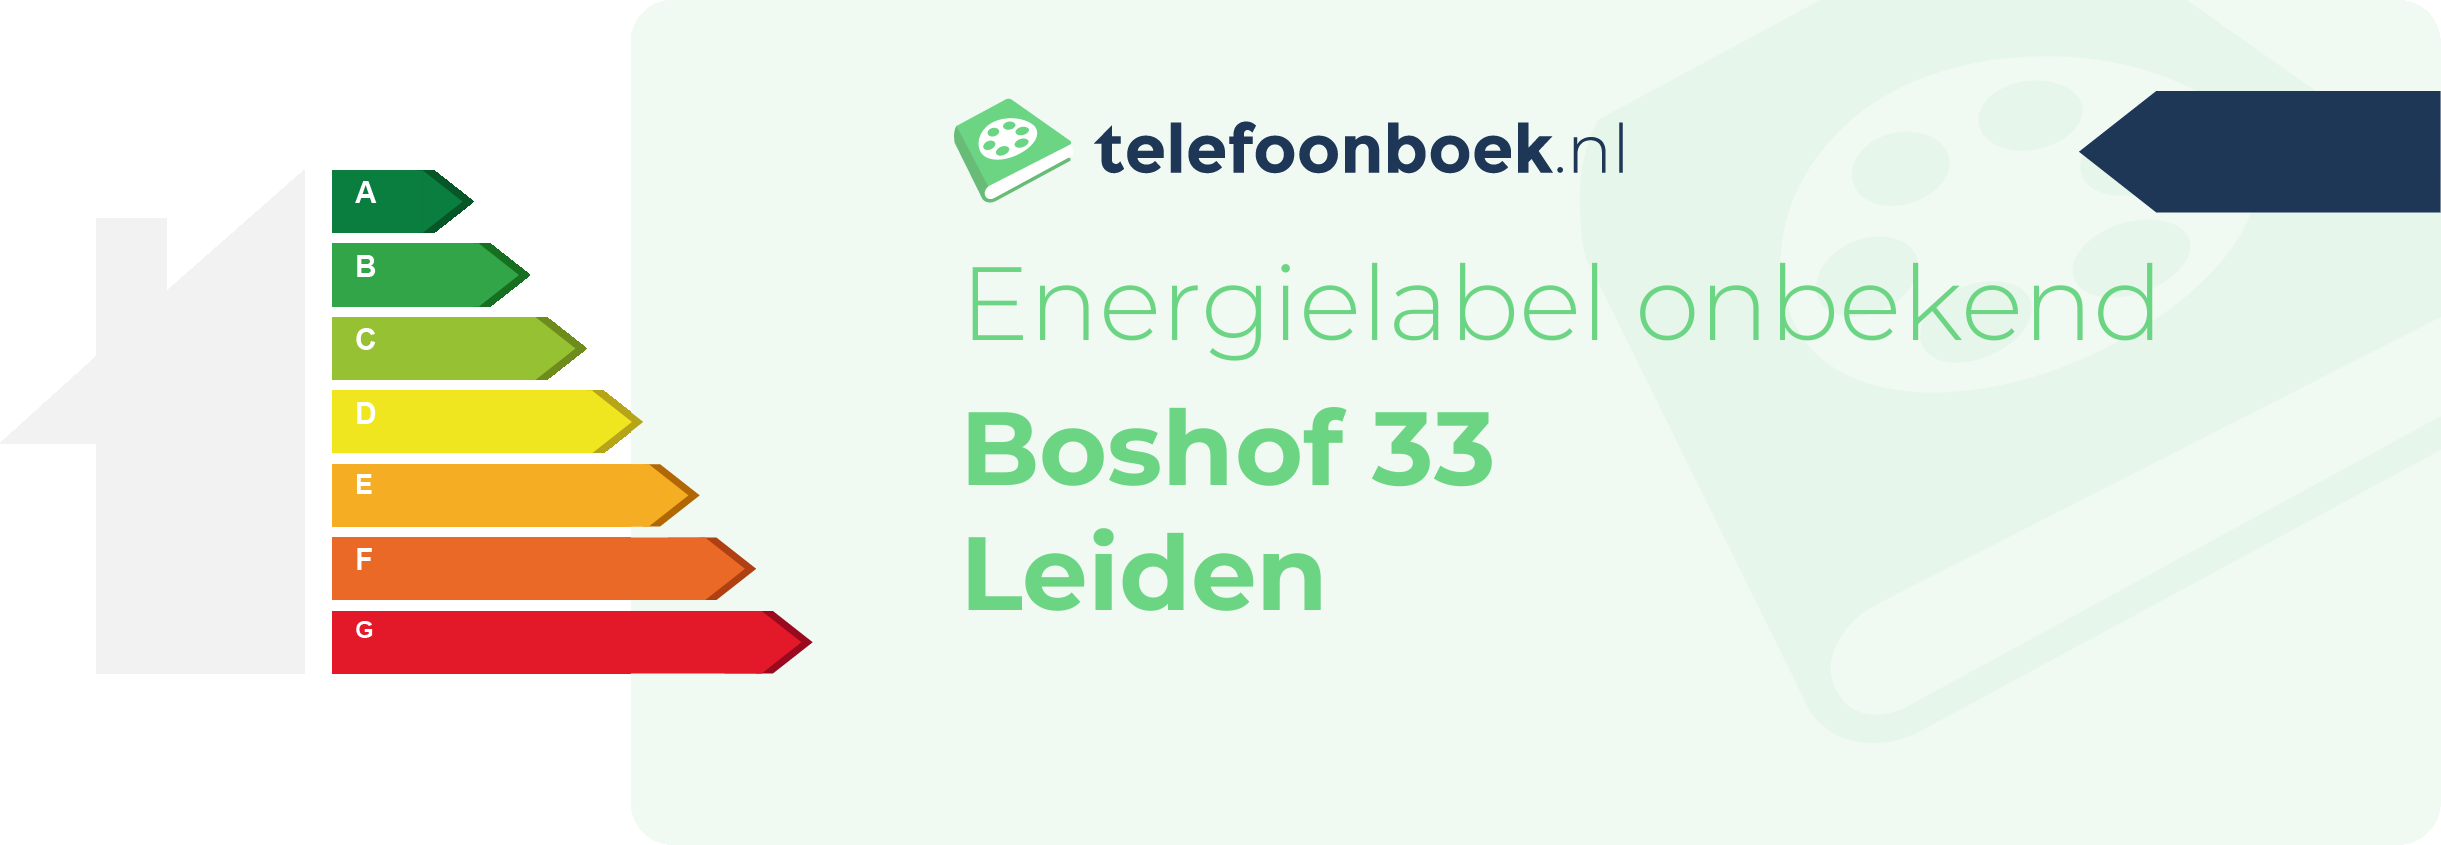 Energielabel Boshof 33 Leiden